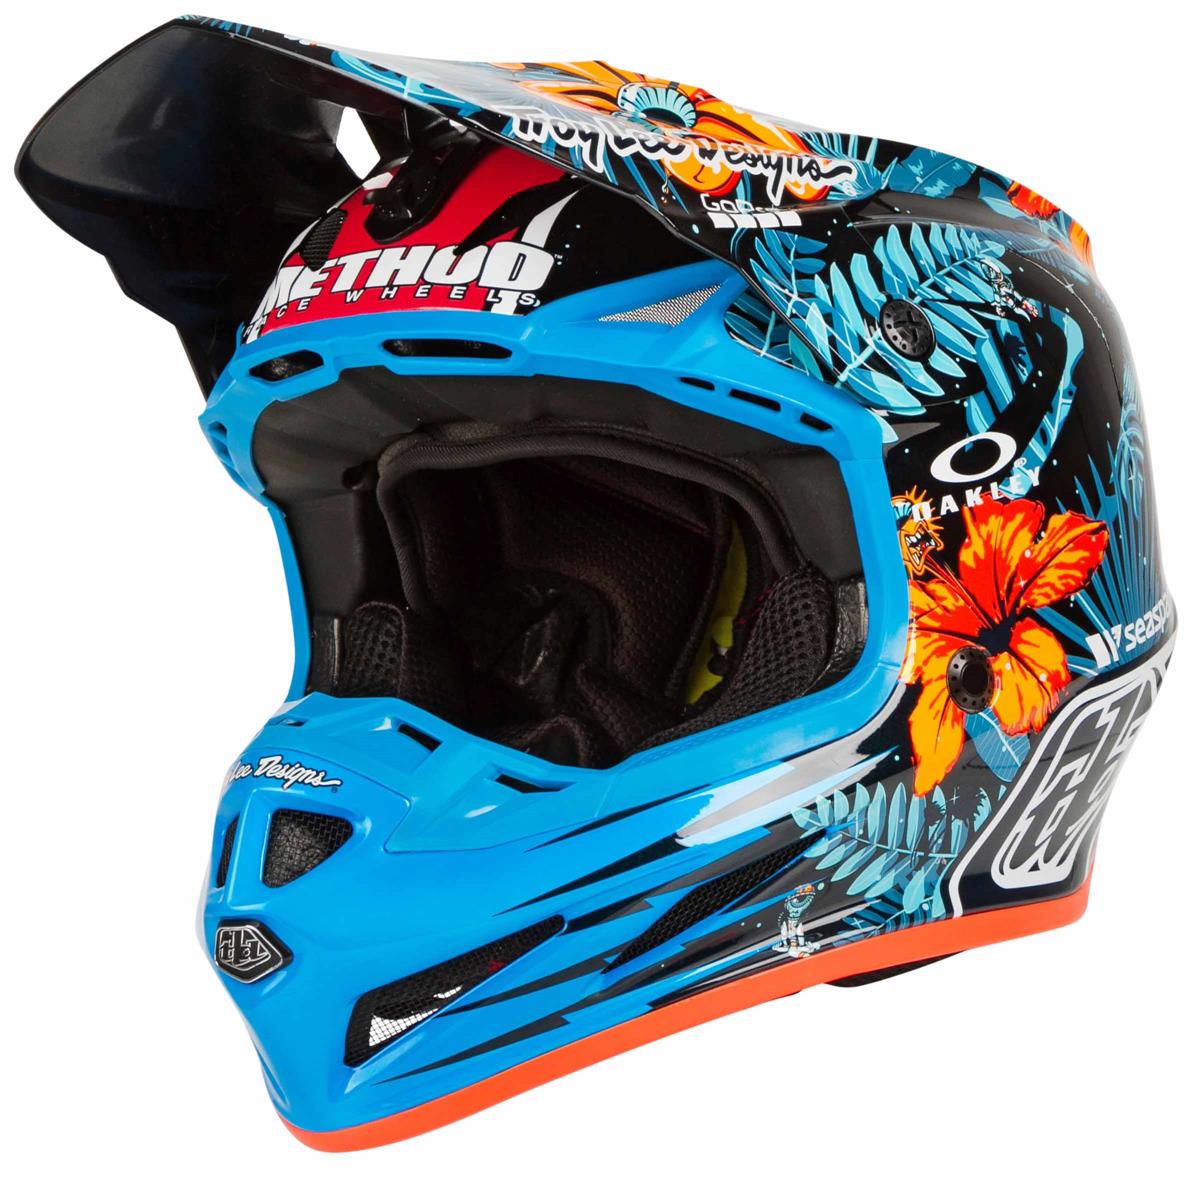 Troy Lee Designs Motocross-Helm SE4 Composite Jungle Cosmic - Blau | eBay